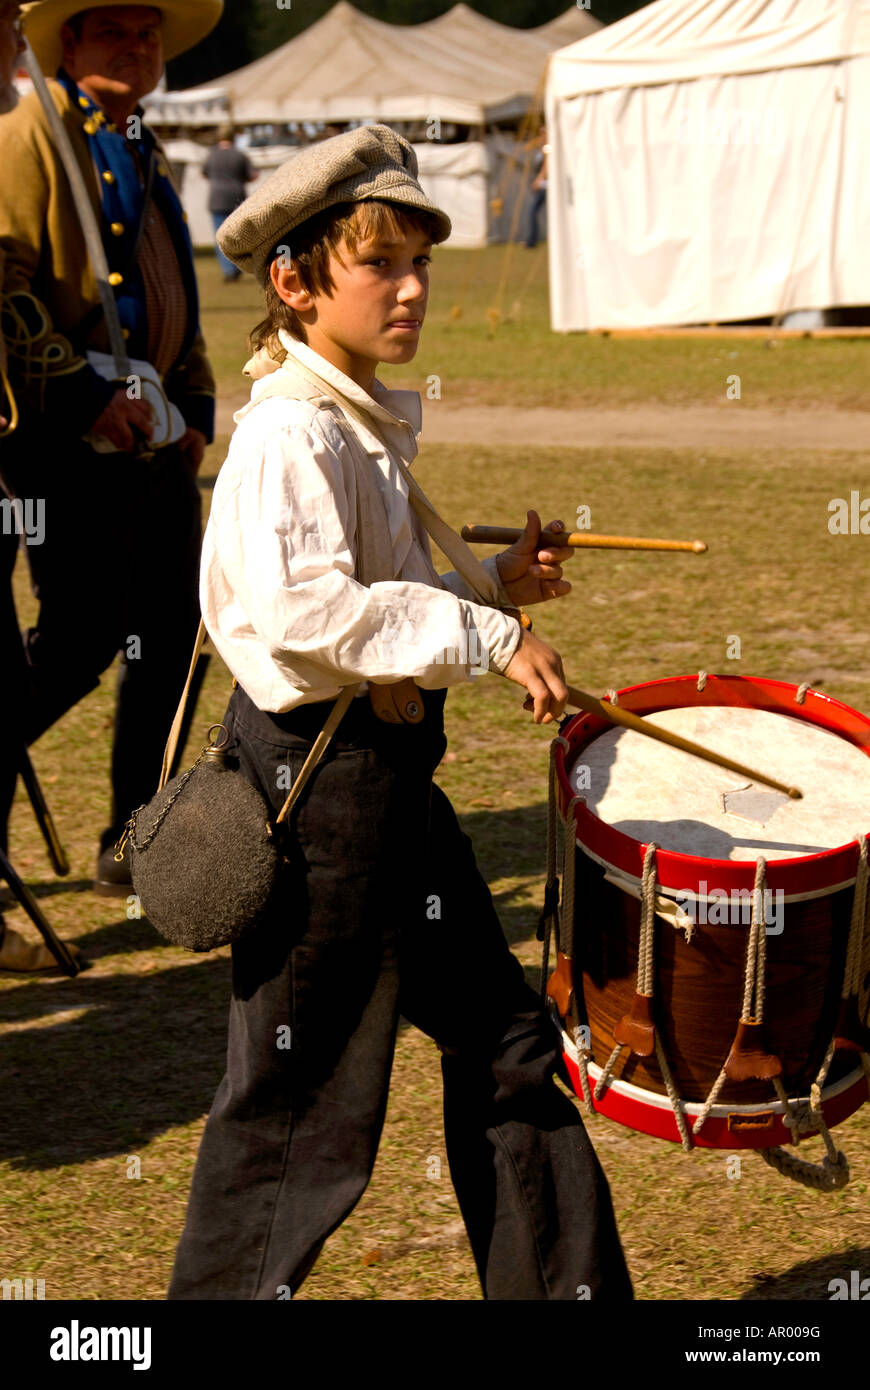 Drummer boy at Civil War Re enactment Stock Photo